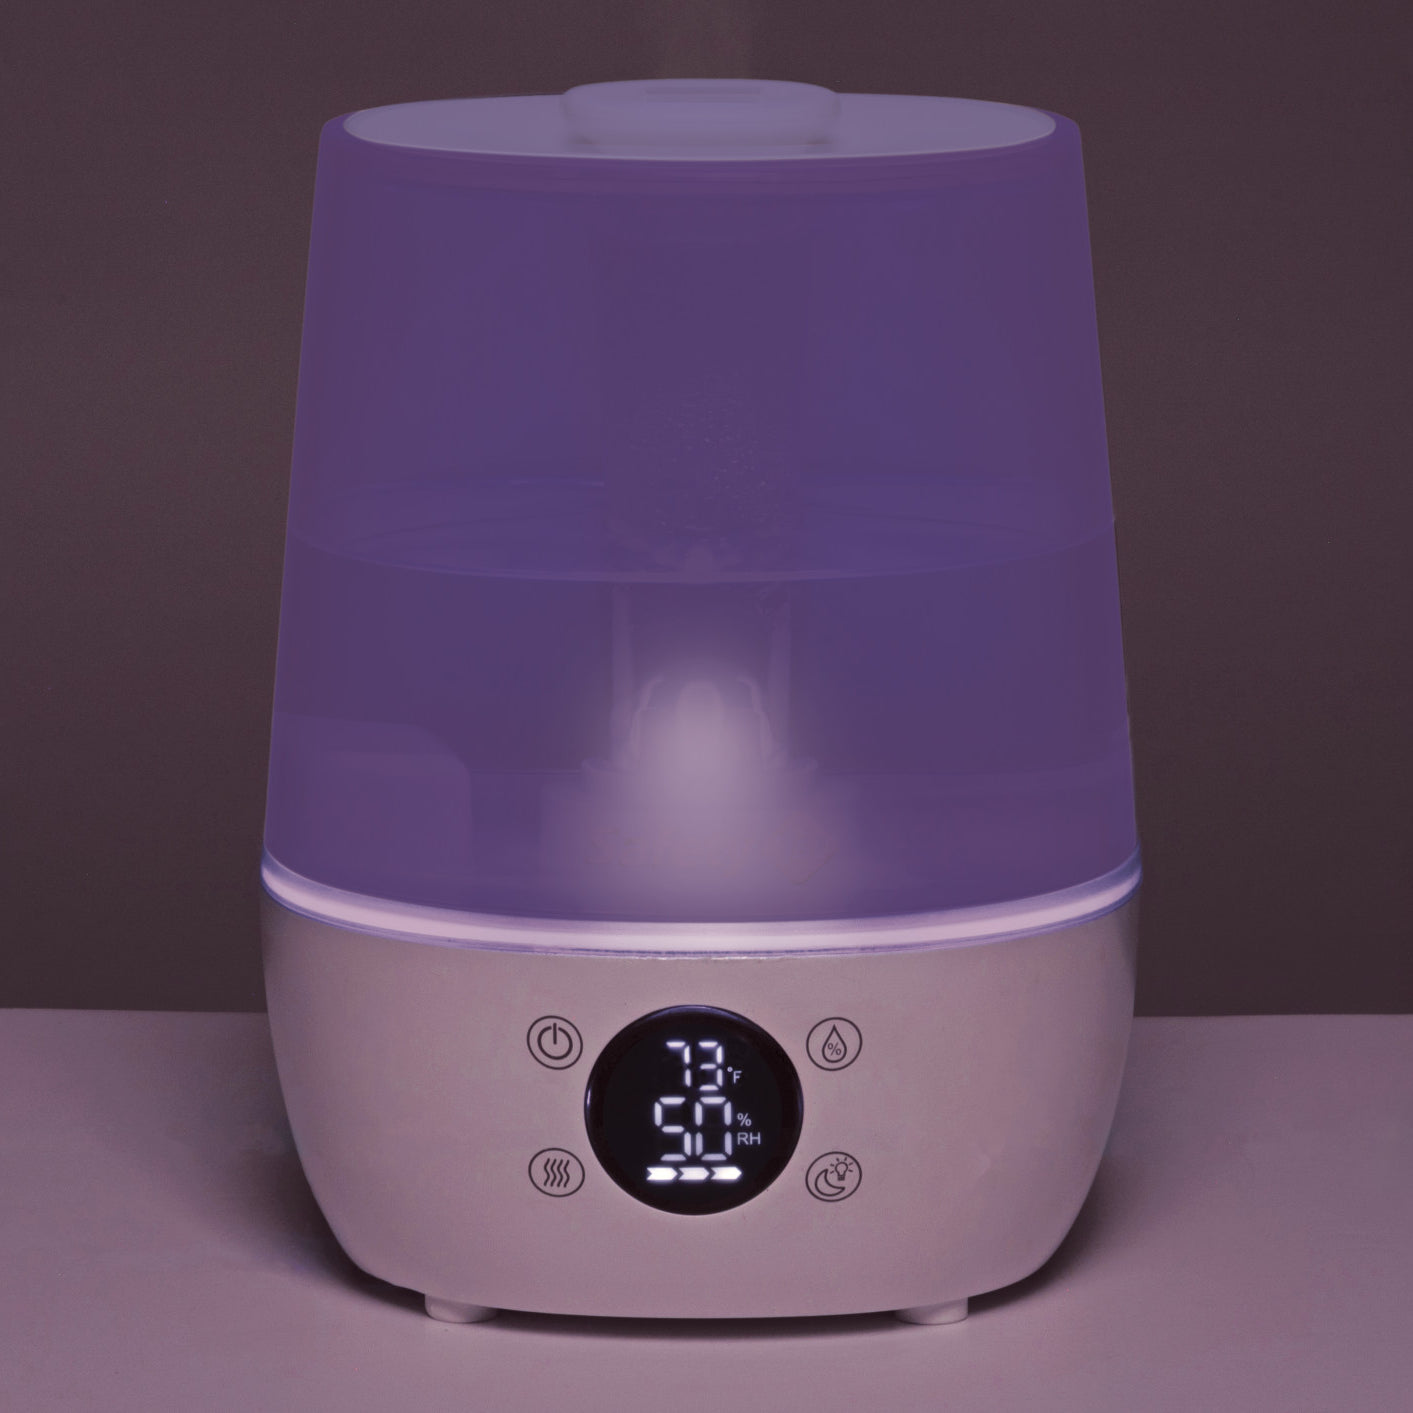 Humid Control Filter Free Humidifier - purple nightlight